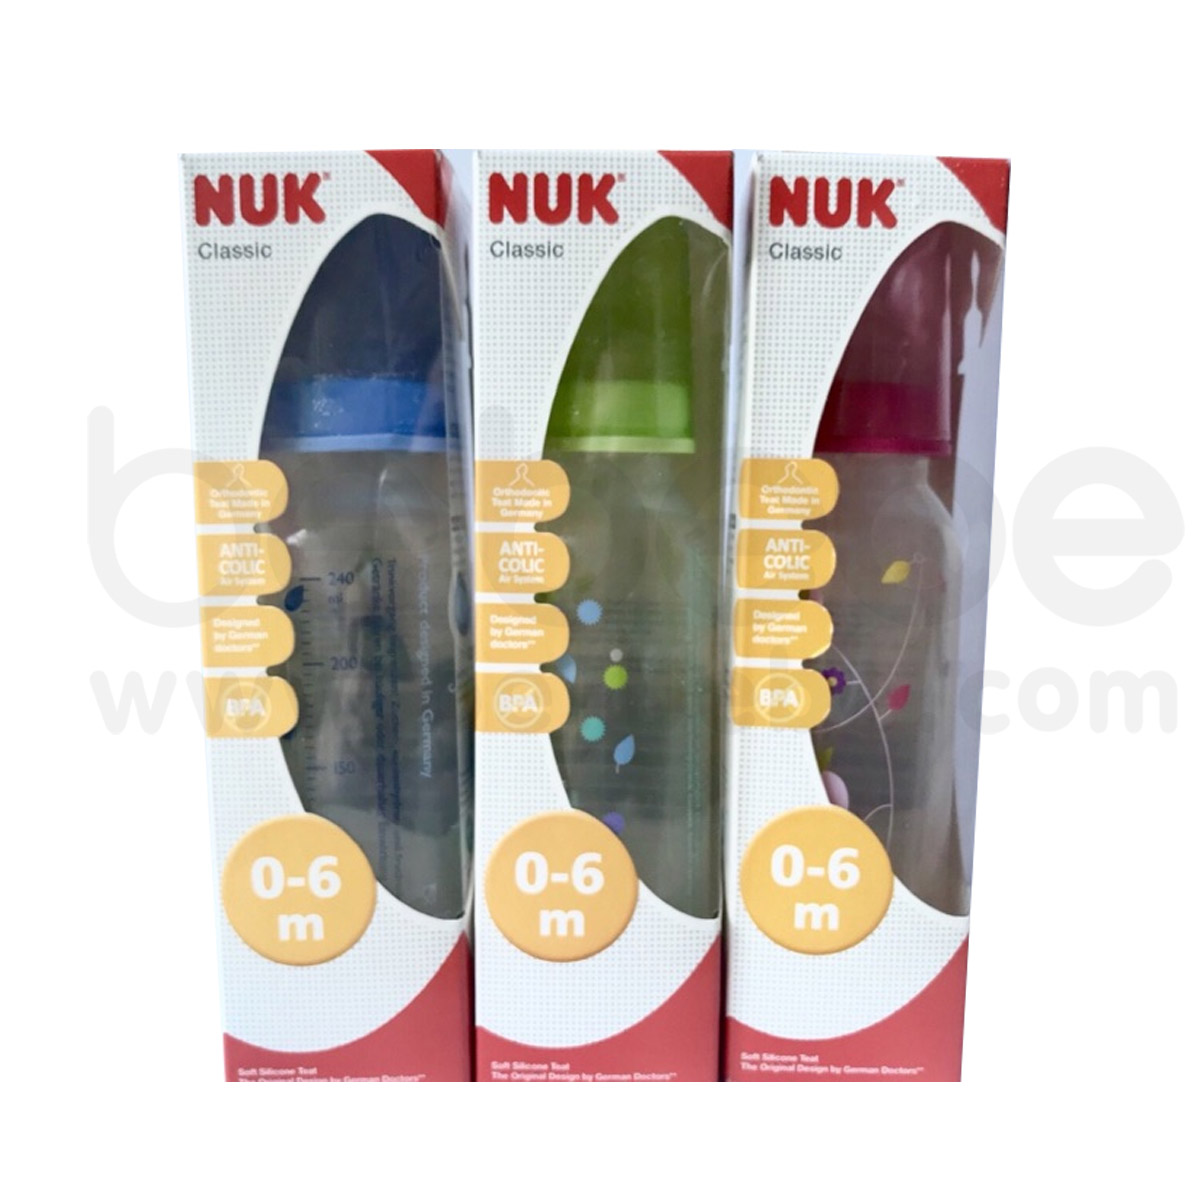 NUK:Classic PP Bottle (0-6 m.) 240 ml.